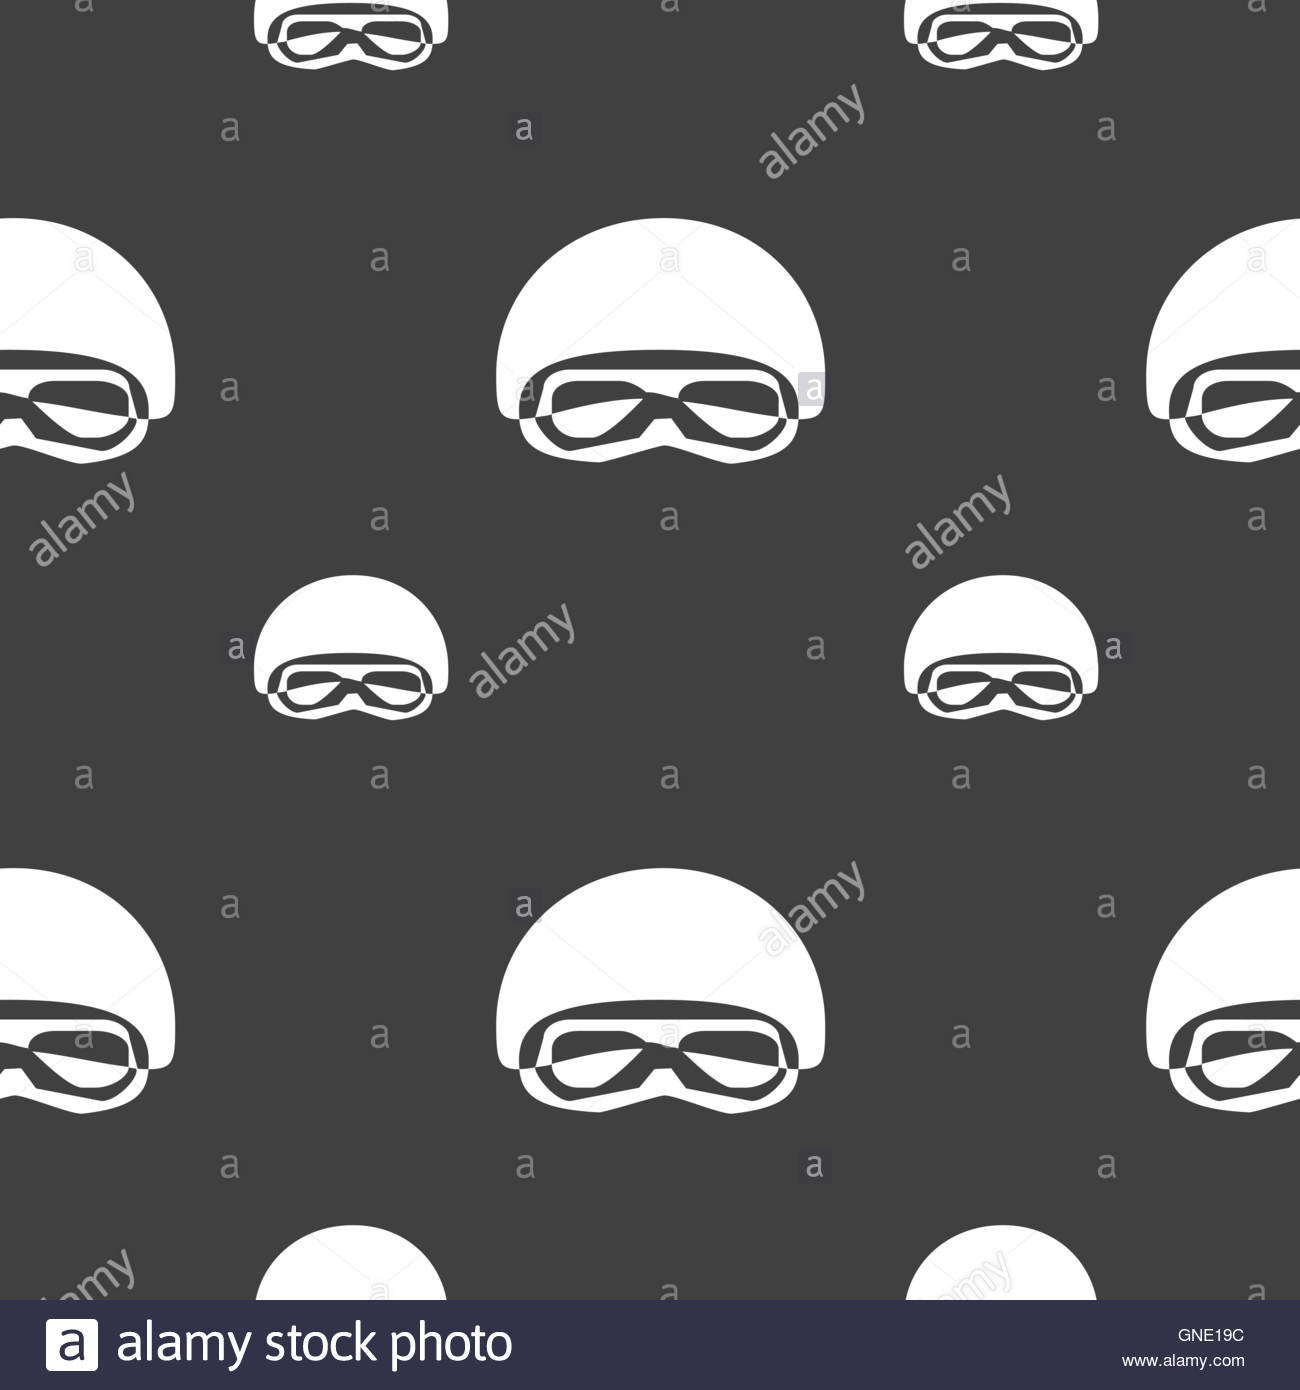 Ski-mask icons | Noun Project